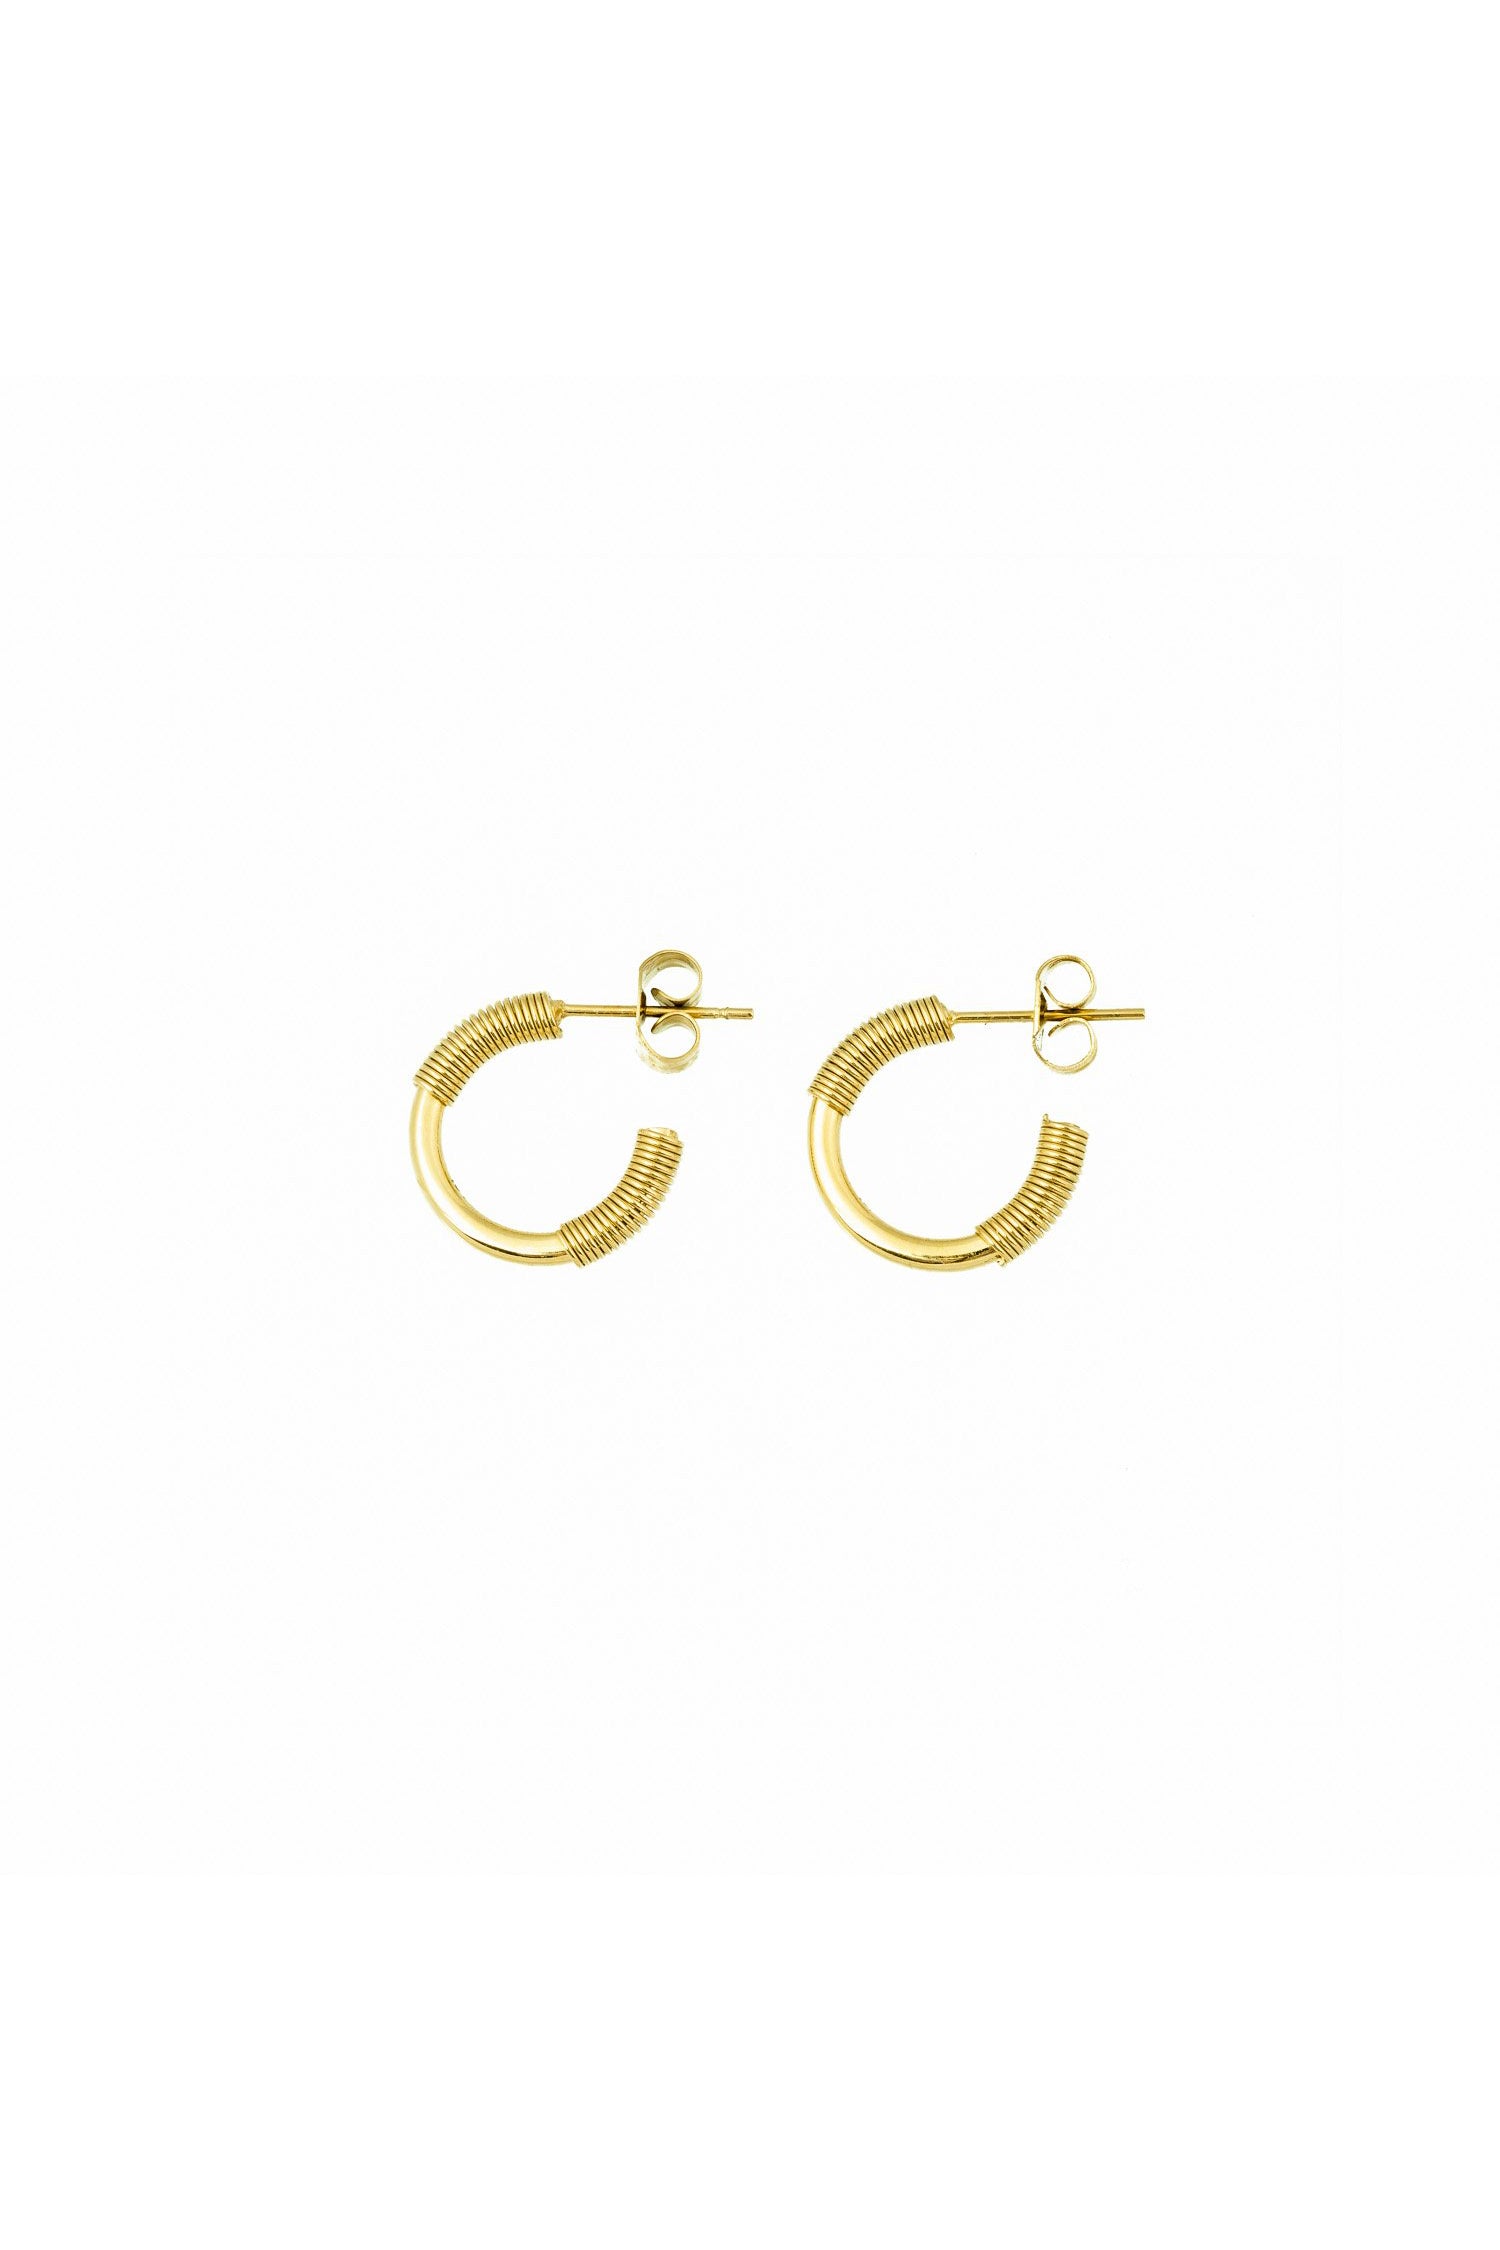 Bandhu Spiral Earrings - Gold - RUM Amsterdam